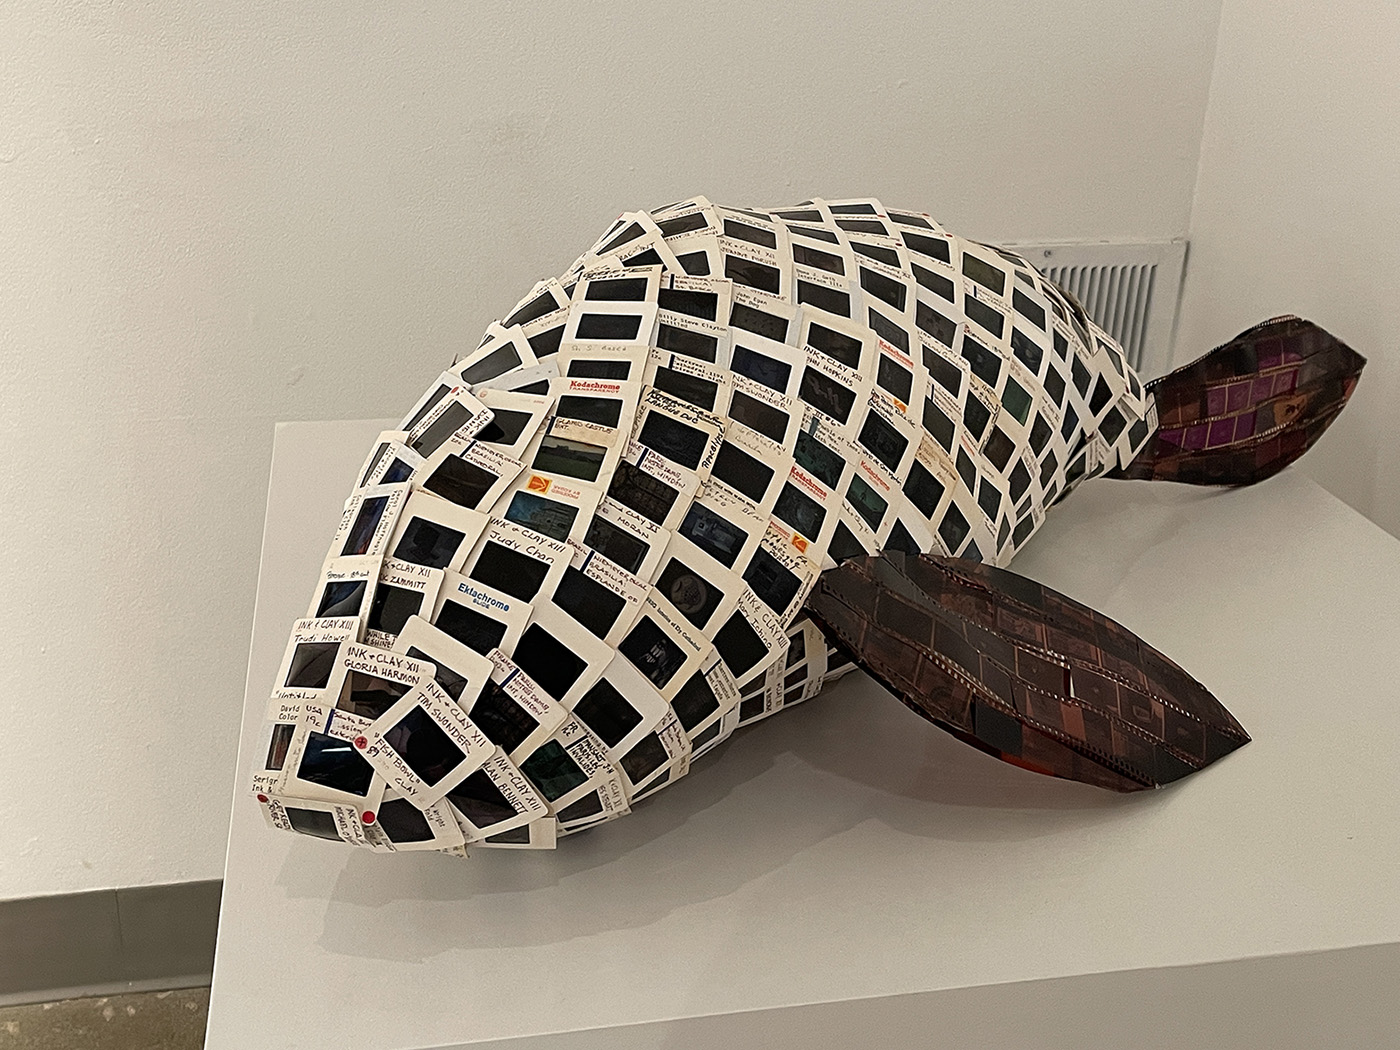 A sculpture of a whale